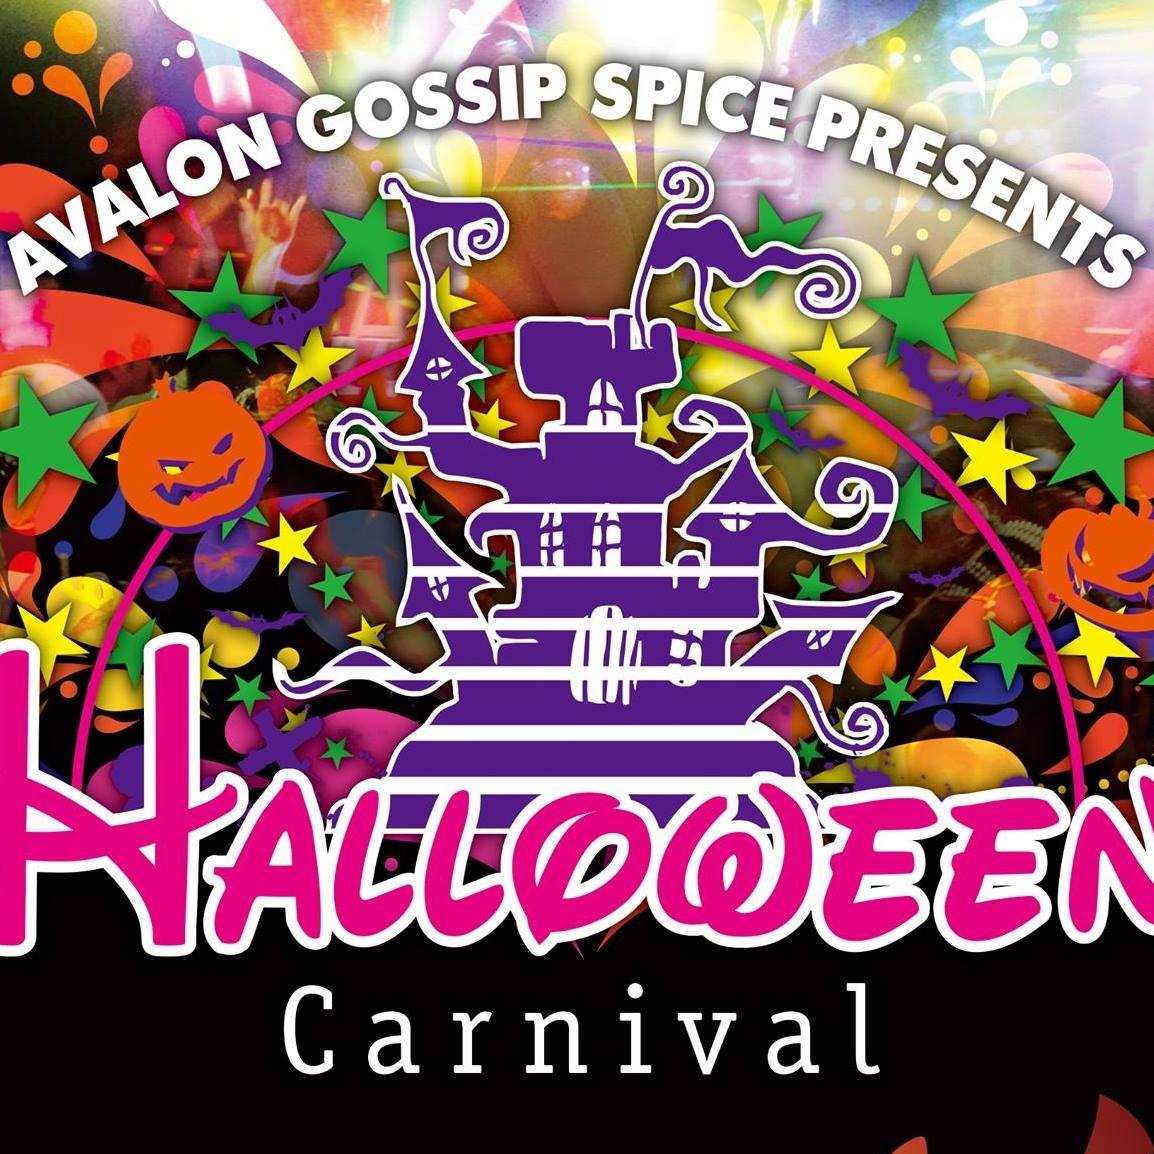 Halloween Carnival at White Chapel & Harbor Hall
Fri Oct 21, 6:30 PM - Fri Oct 21, 9:30 PM